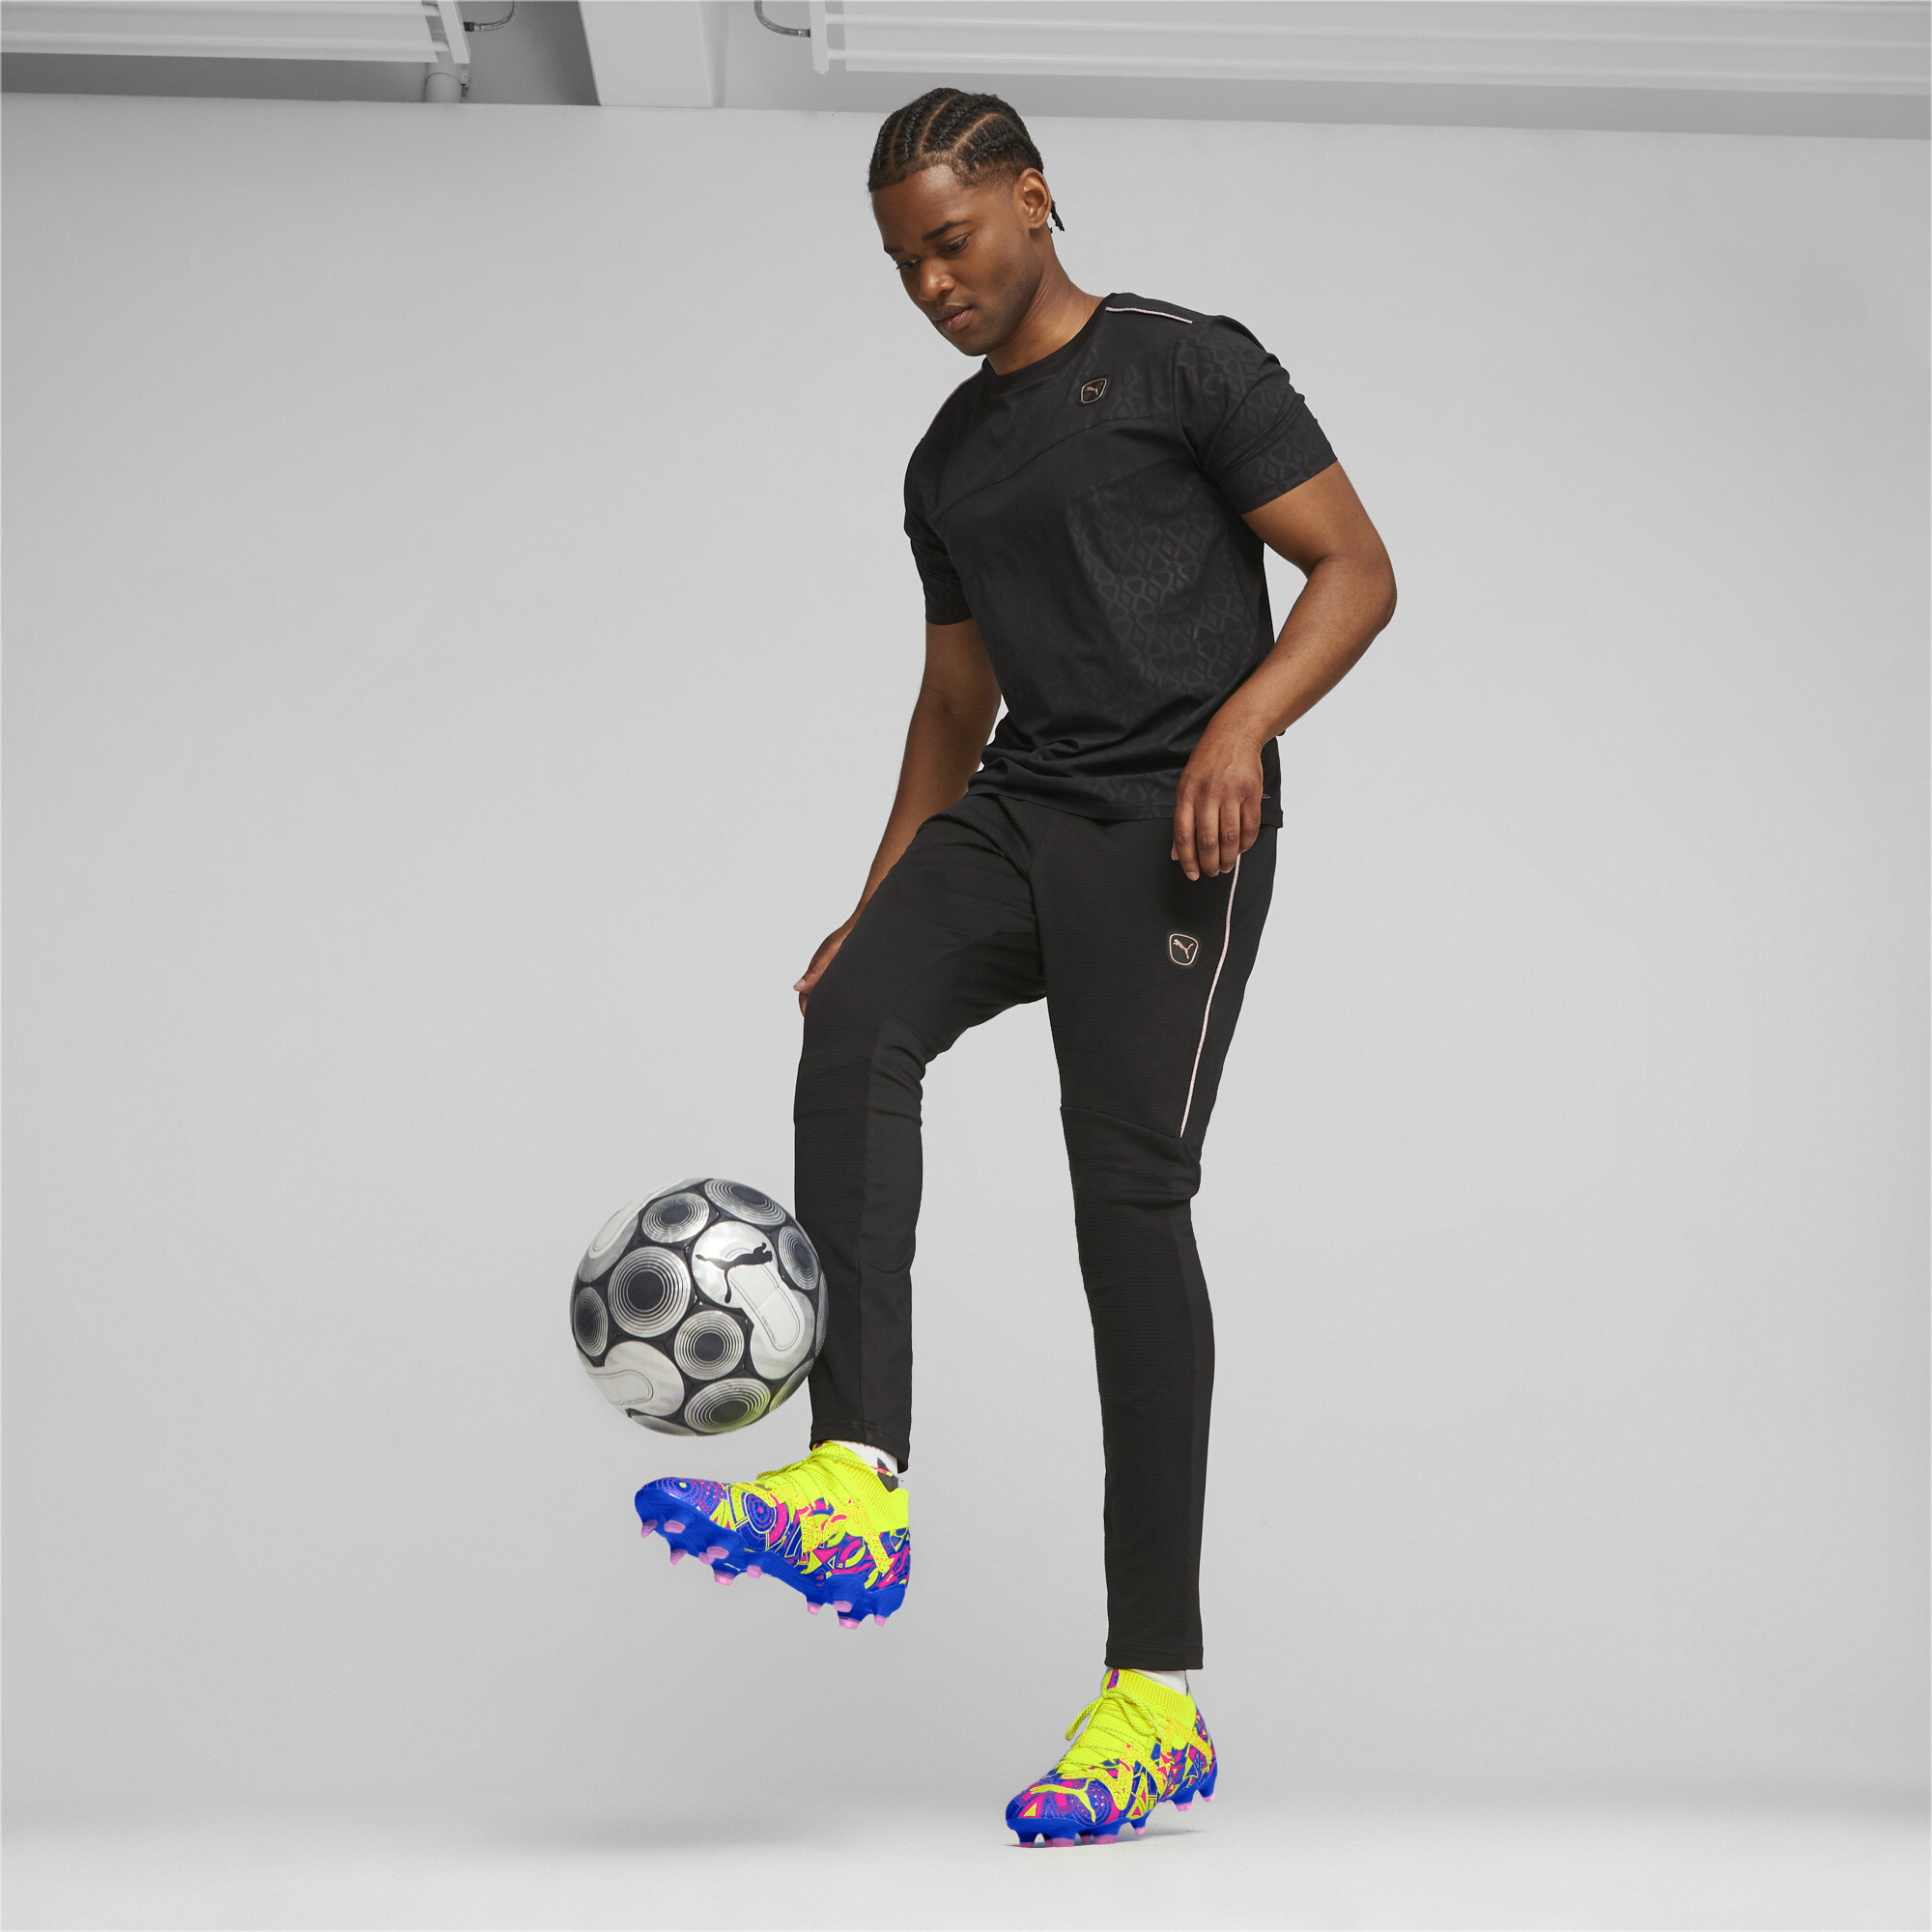 Men's Puma FUTURE ULTIMATE ENERGY FG/AG Football Boots, Blue, Size 41, Shoes